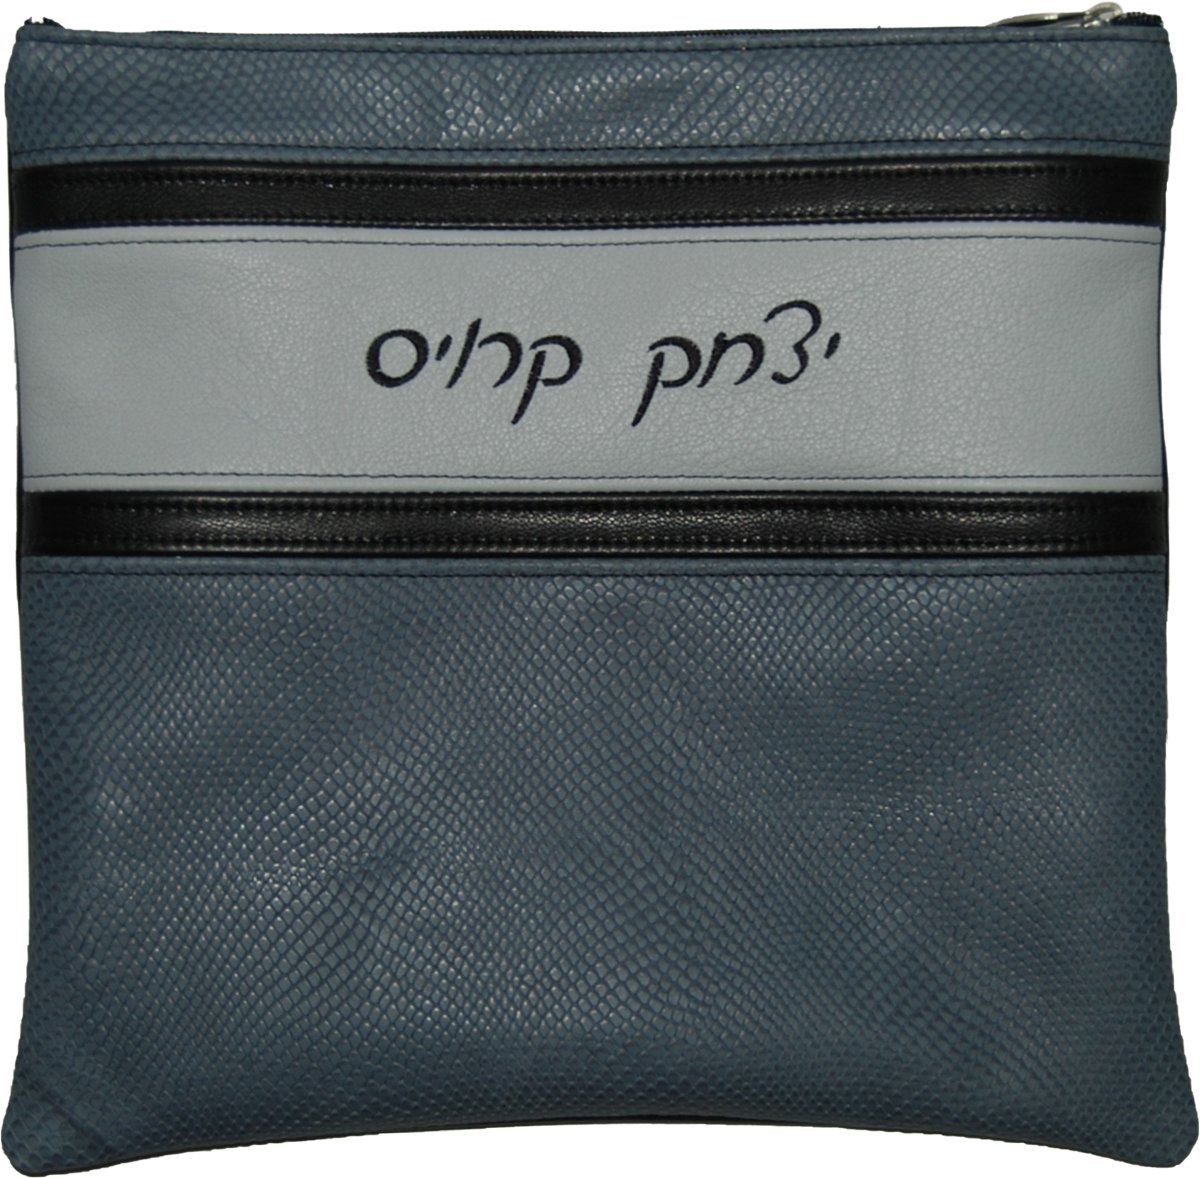 5 pieces of horizontal leathers Tallis bag set. - Simcha Couture